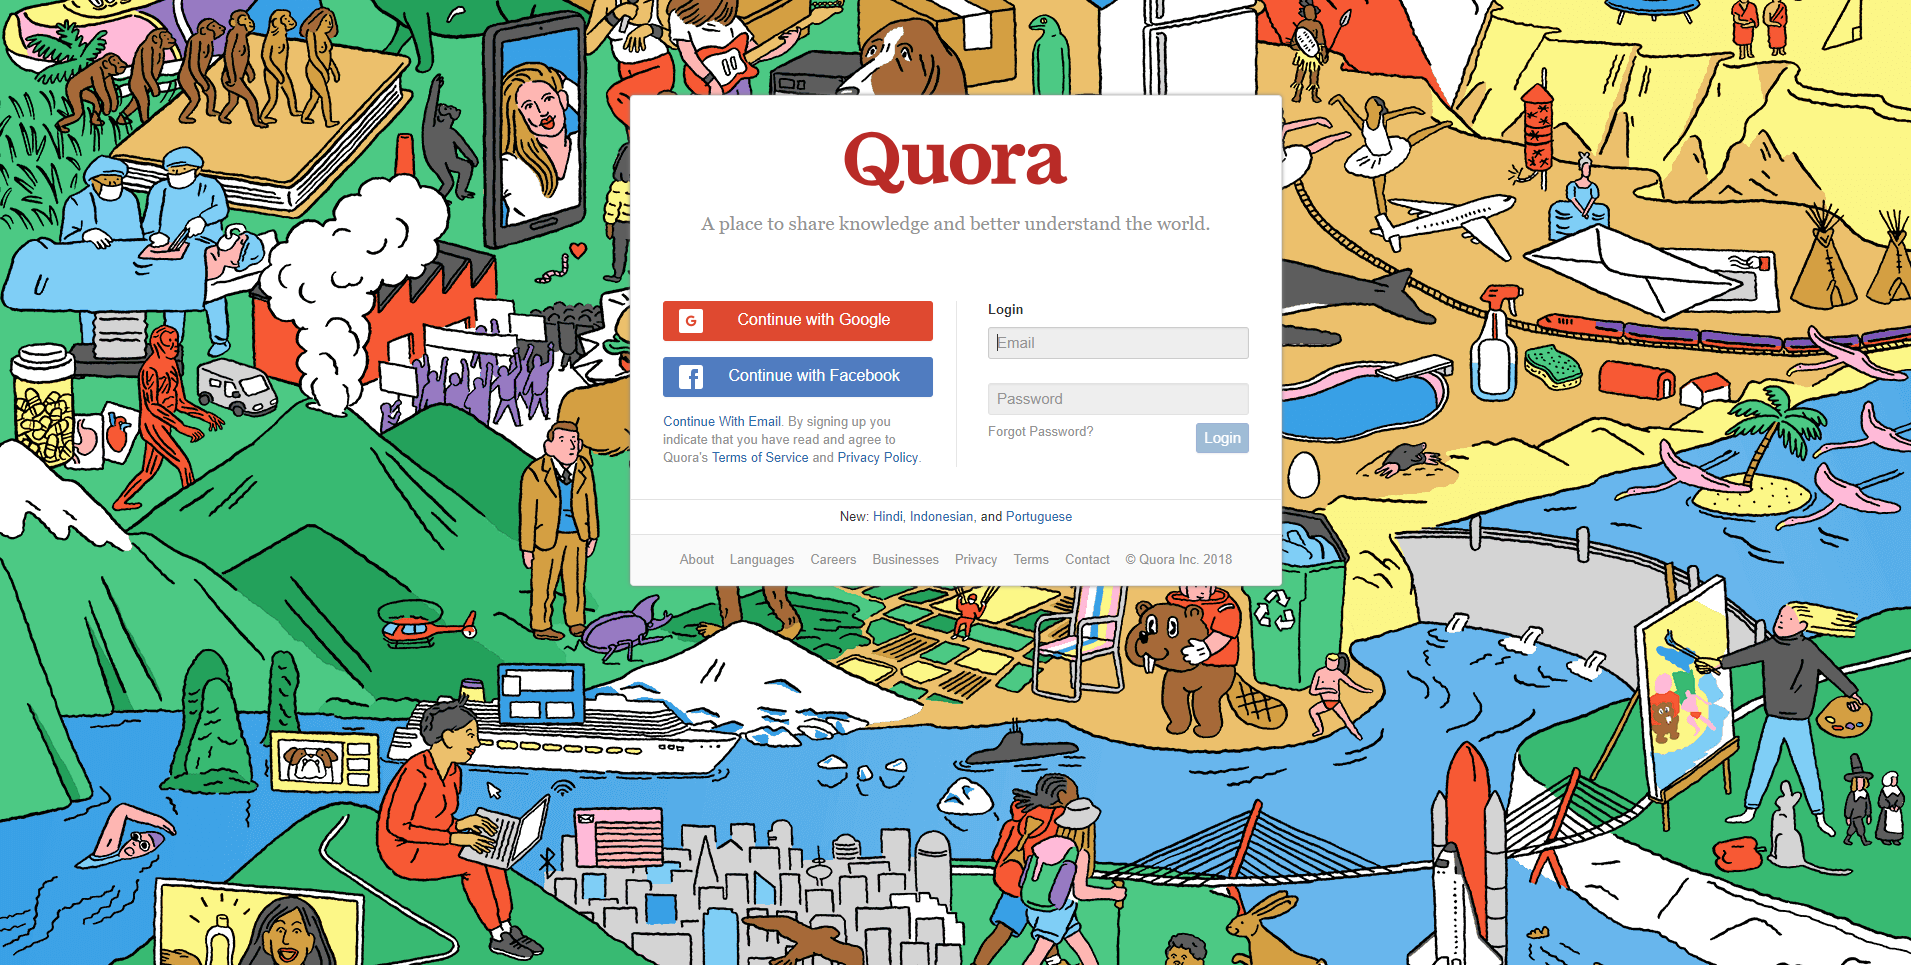 Promotion on Quora